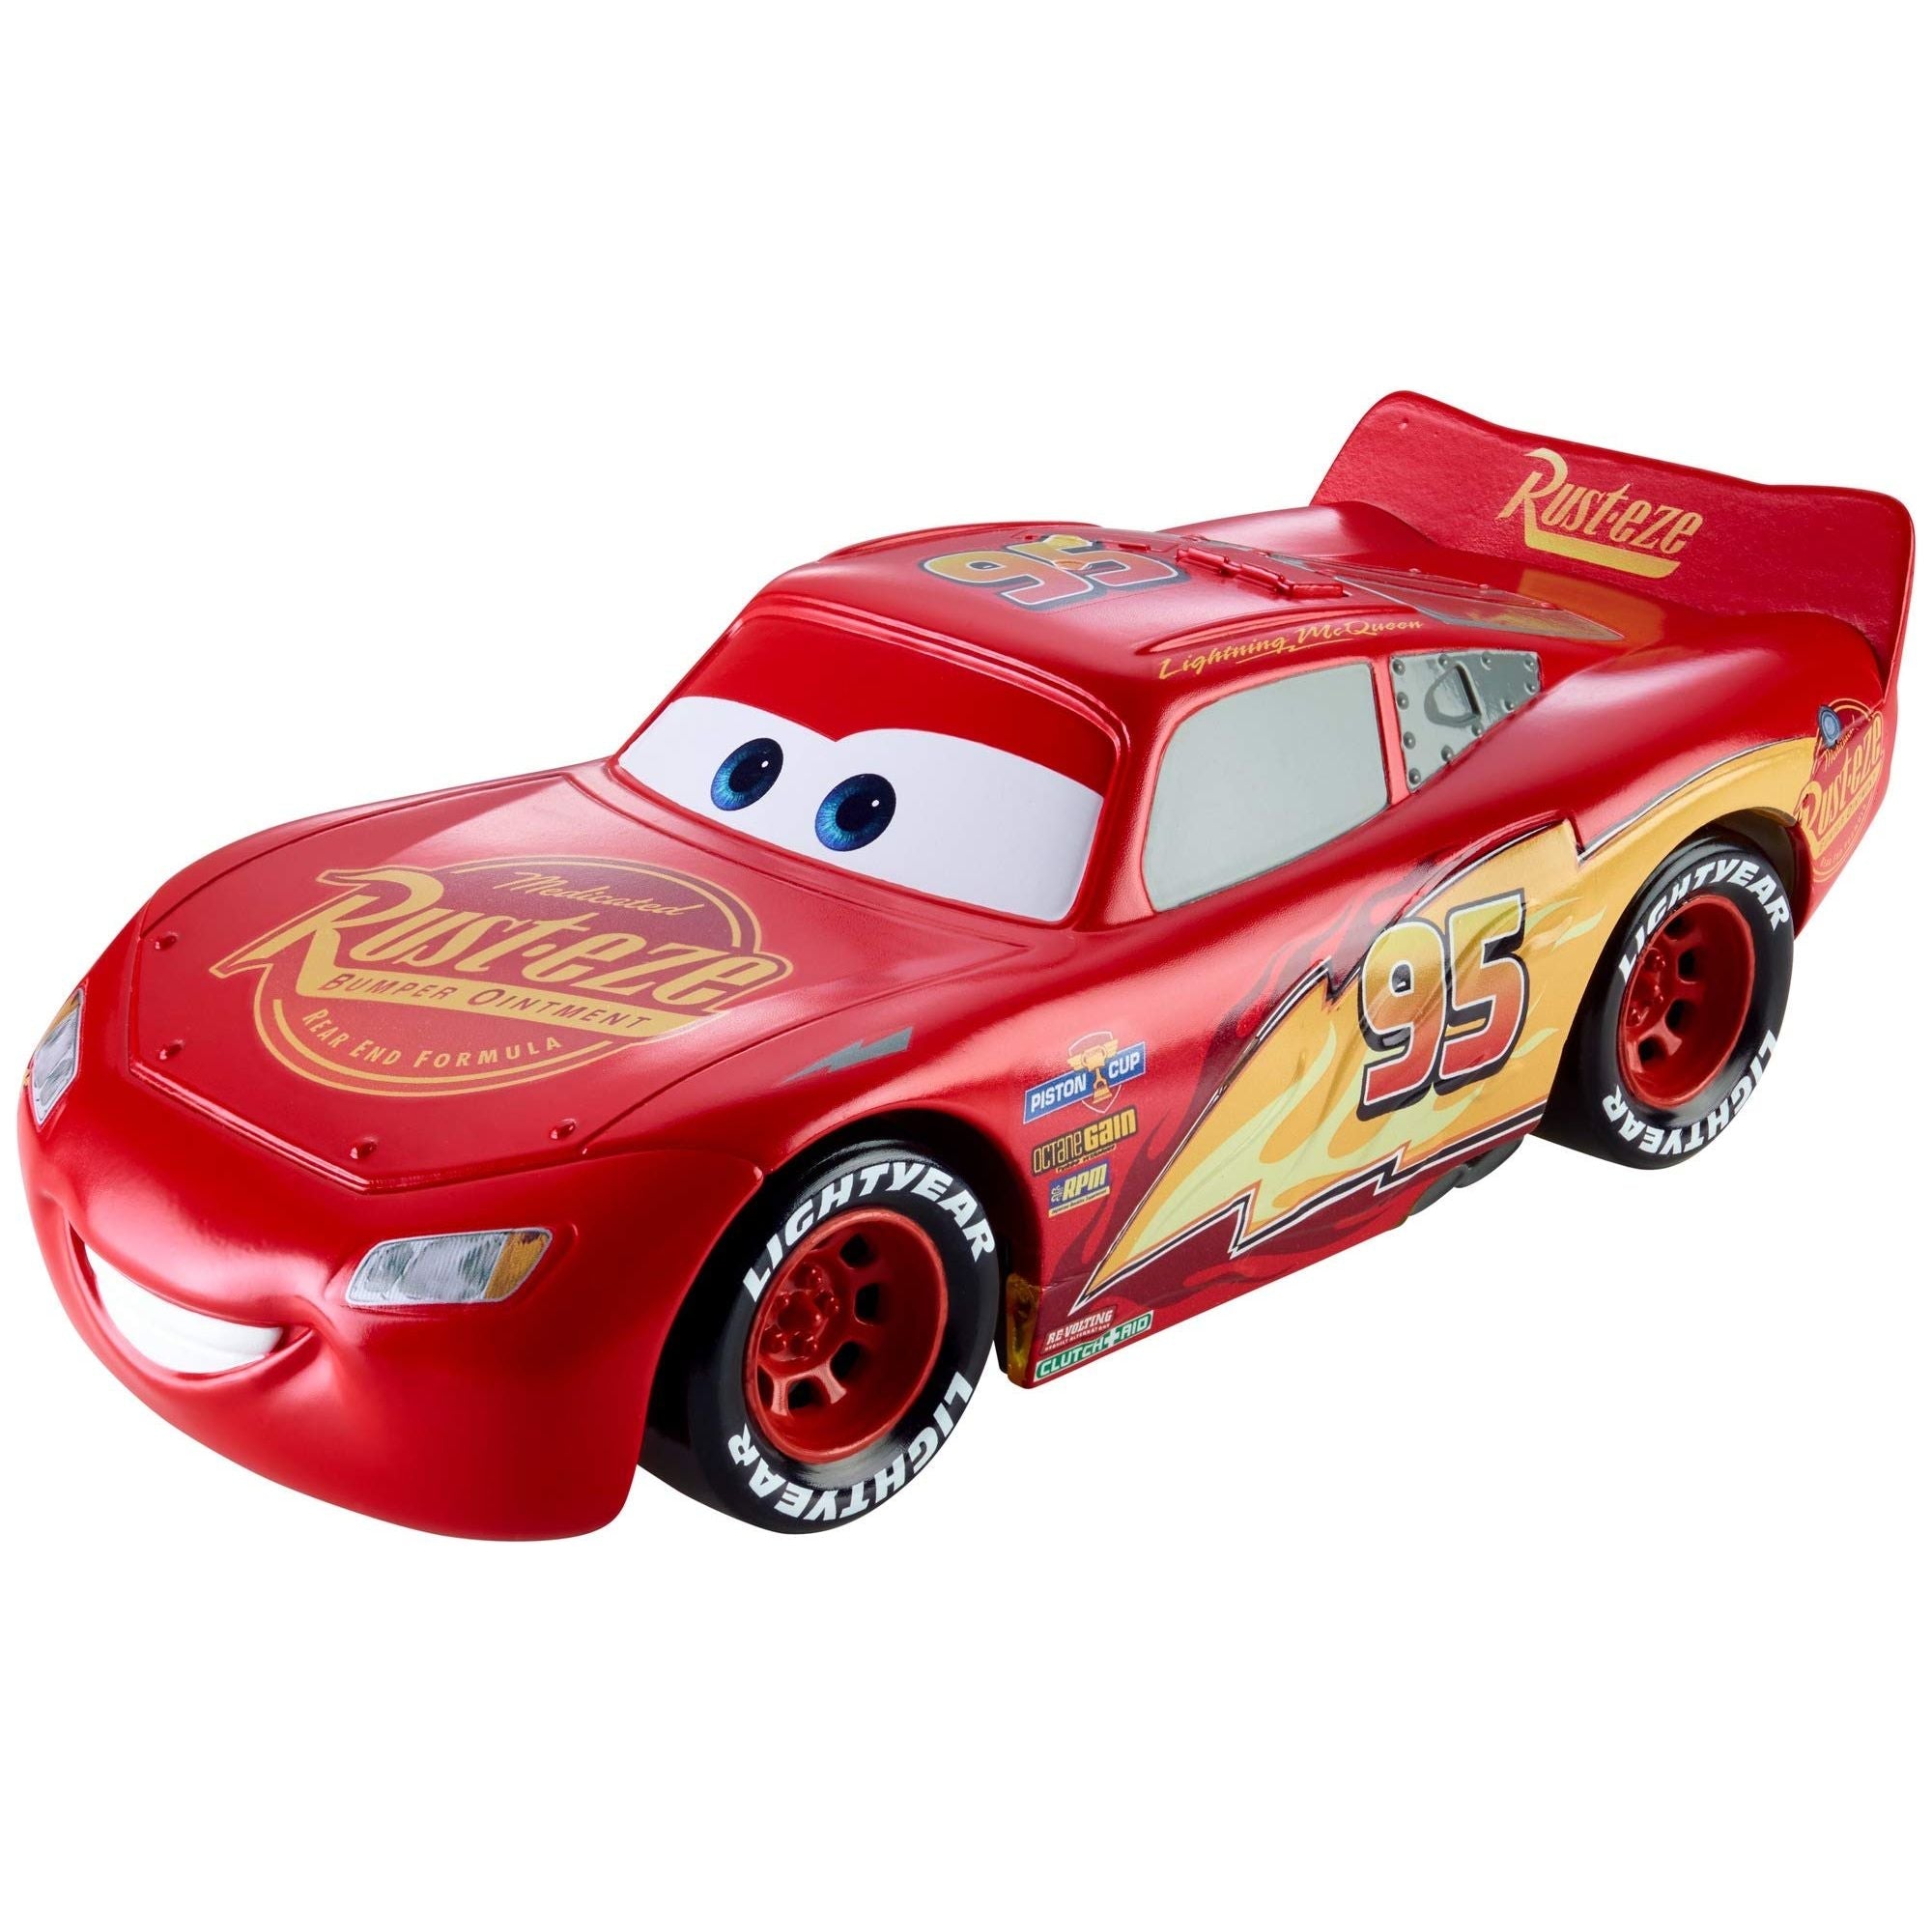 Cars Lightning McQueen Die Cast Large Car